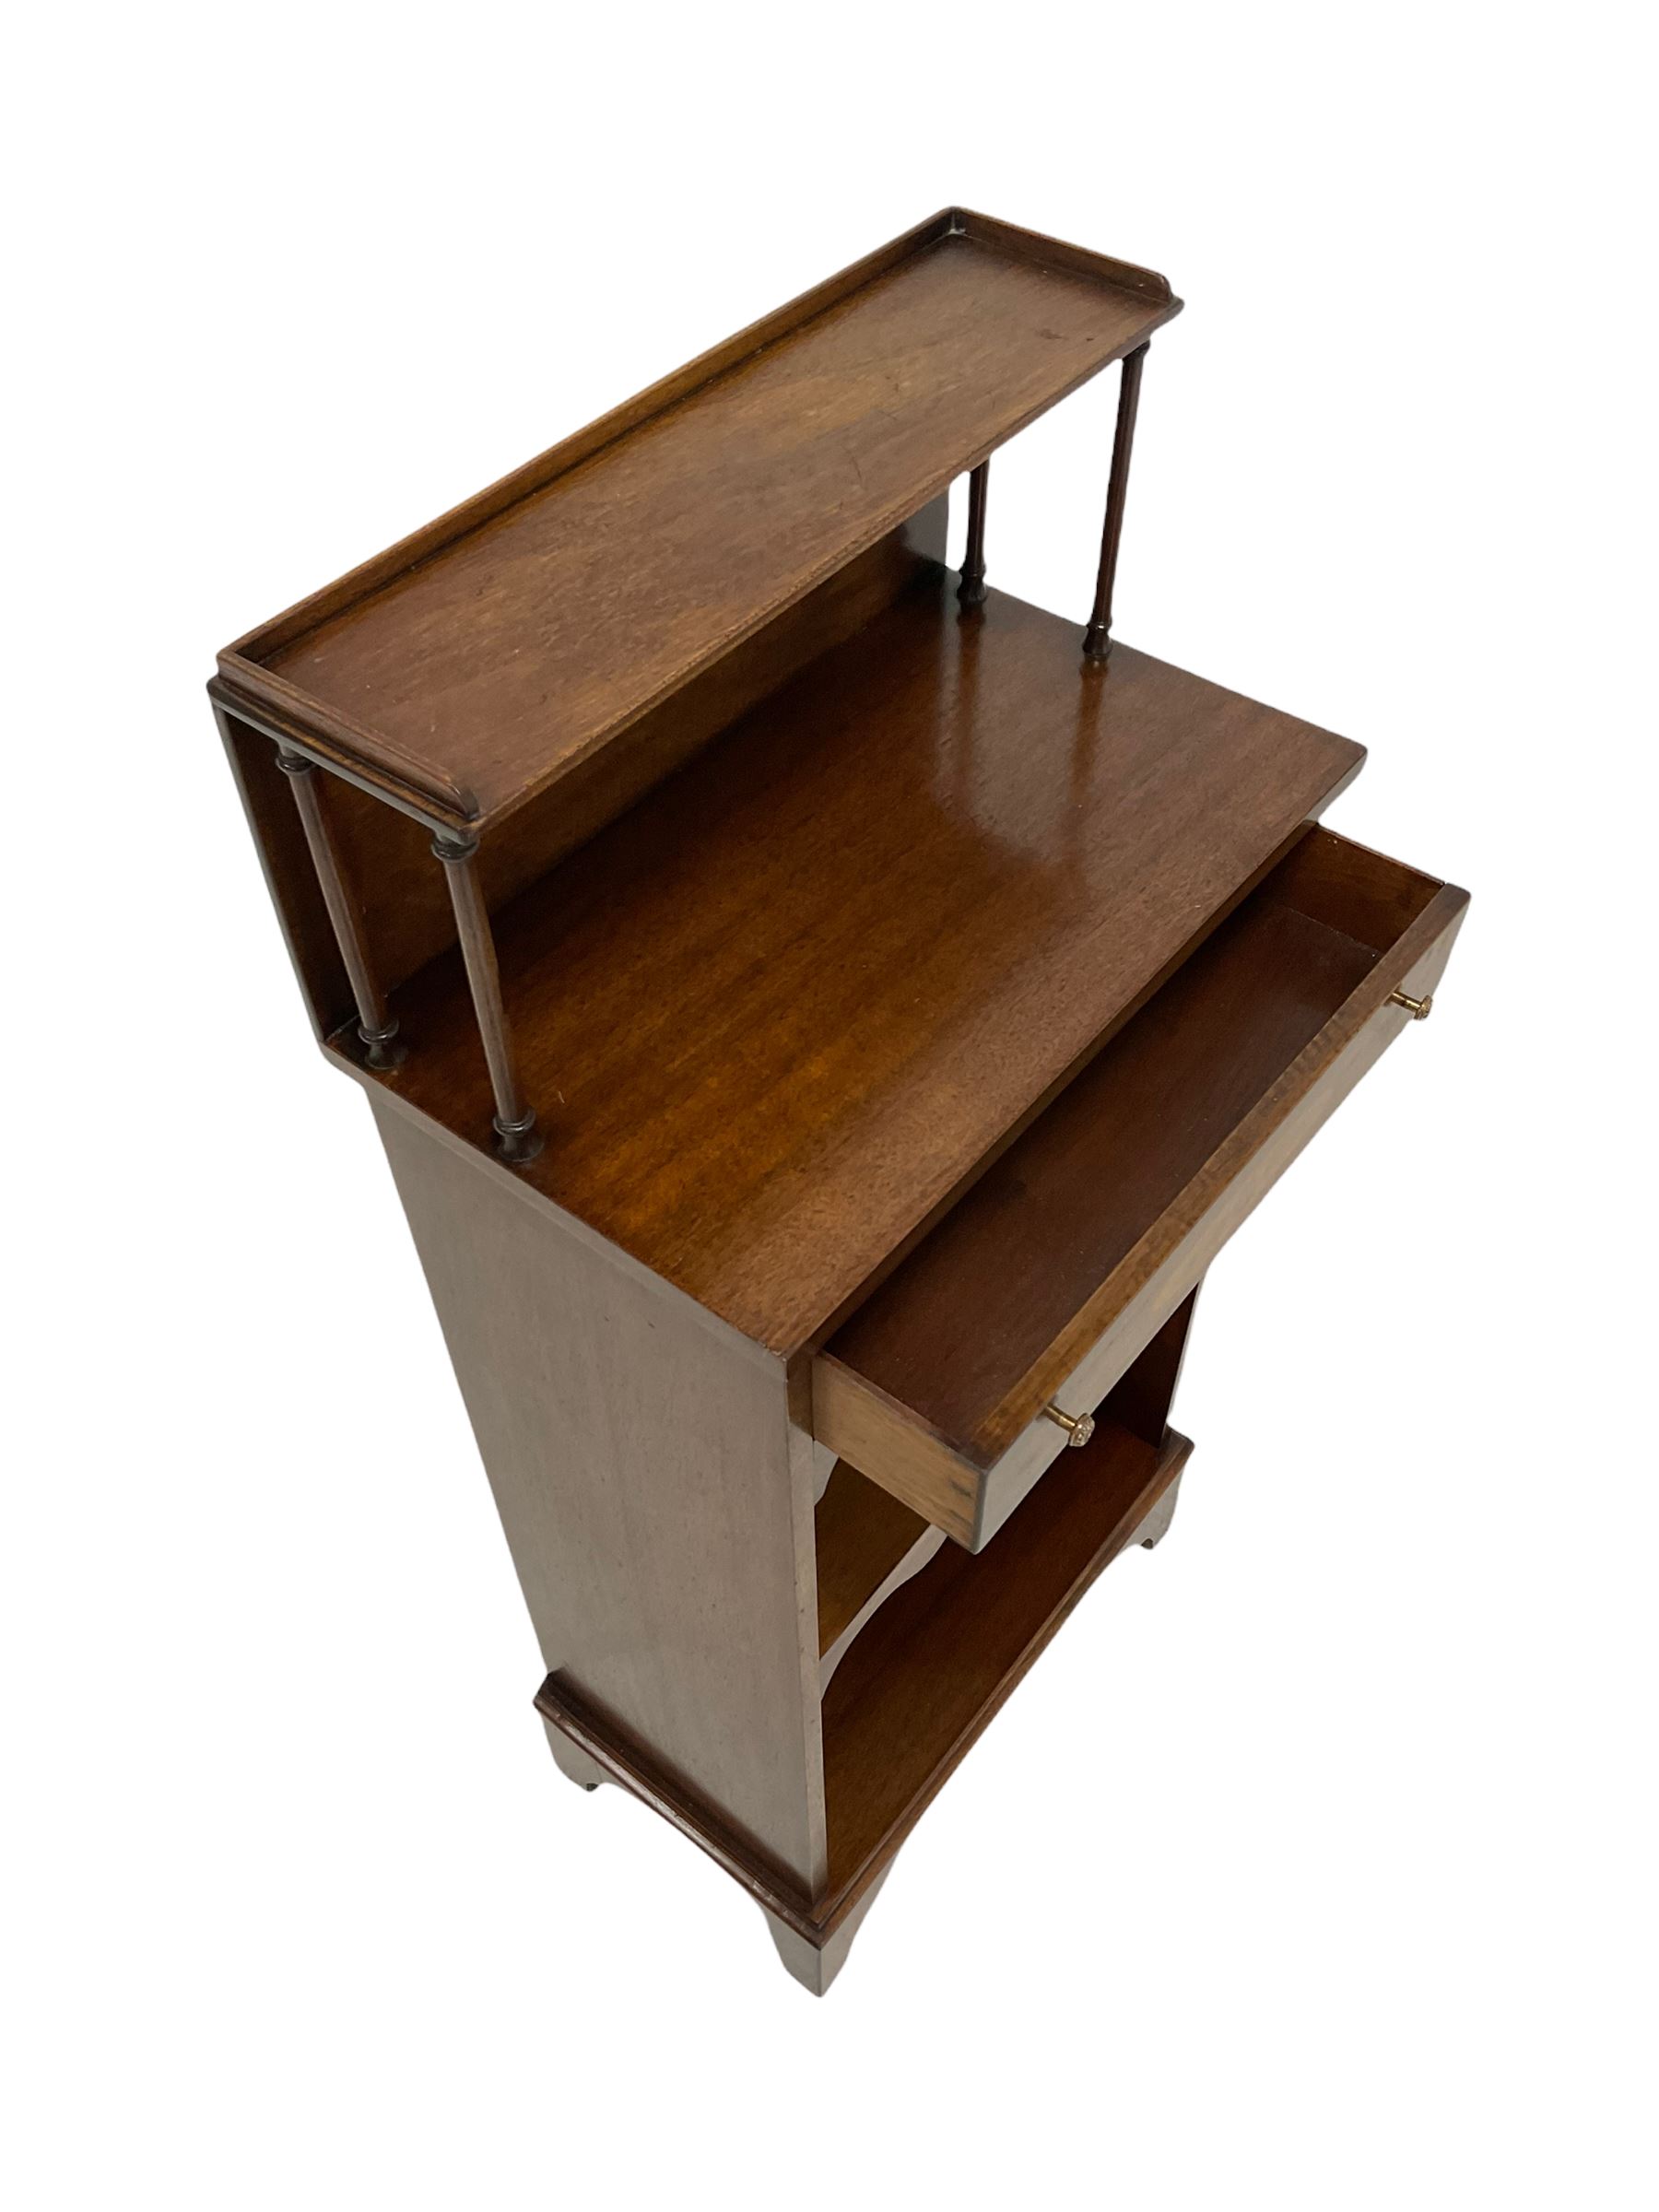 20th century mahogany open bookcase - Image 3 of 4